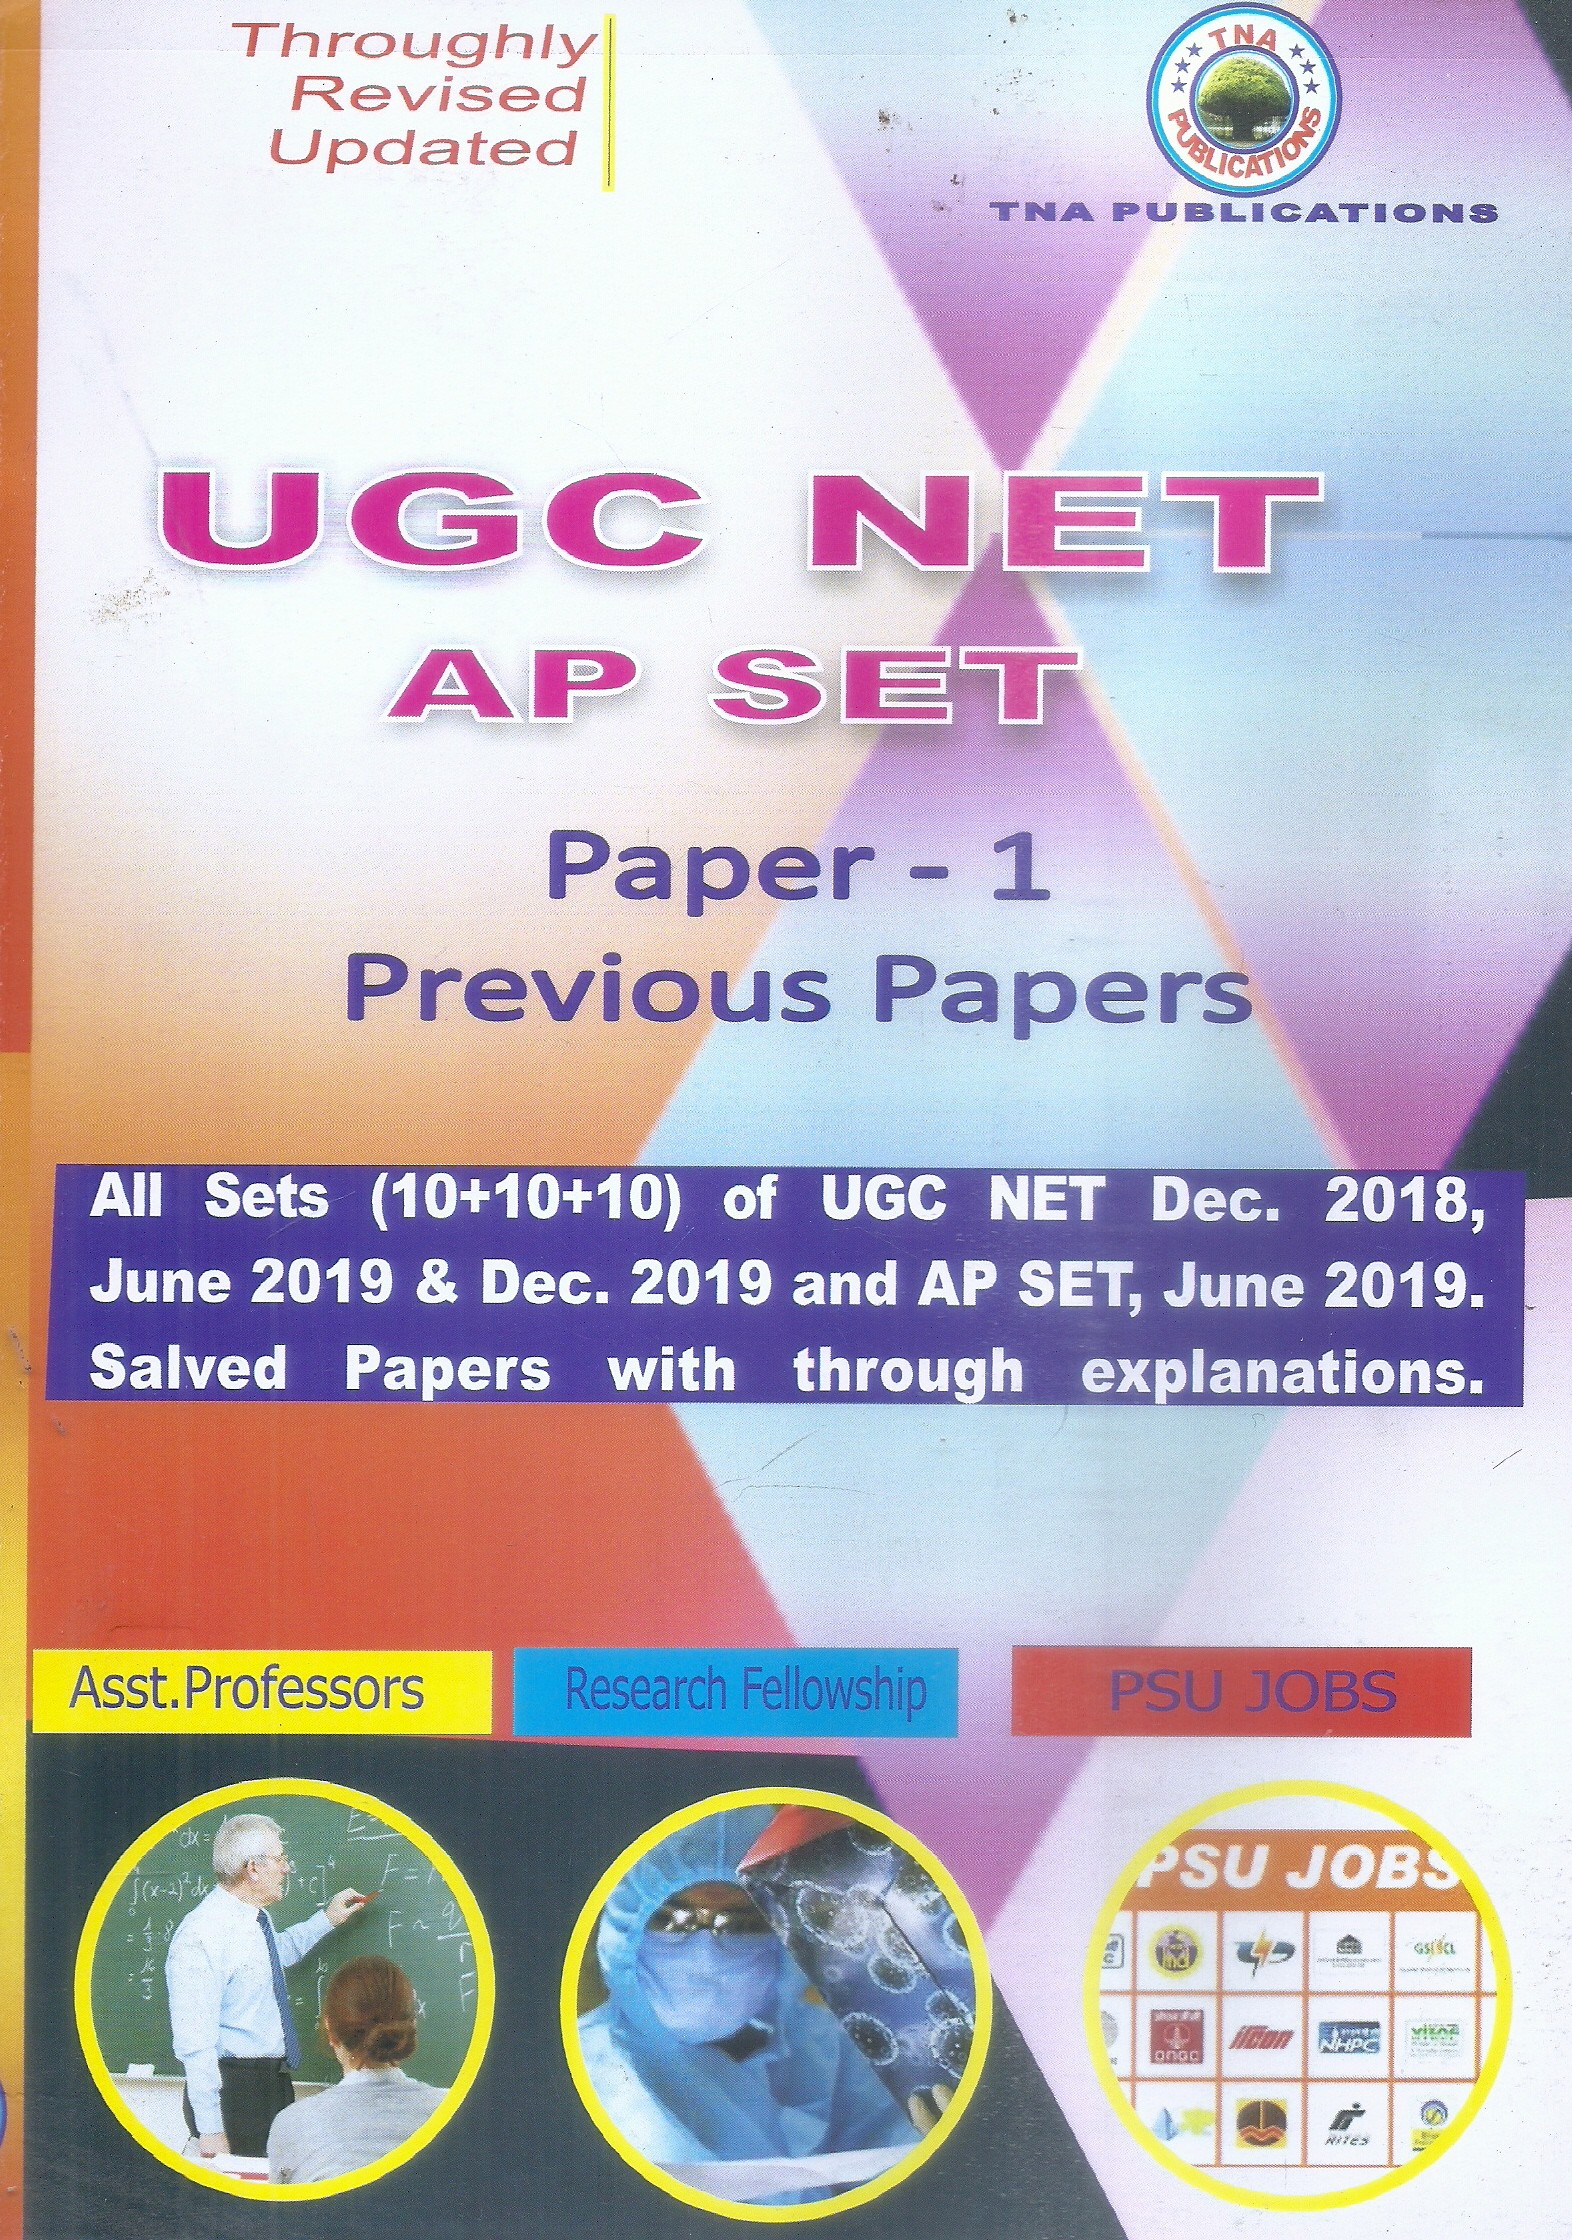 ugc-net-ap-set-paper-1-previous-papers-tna-publications